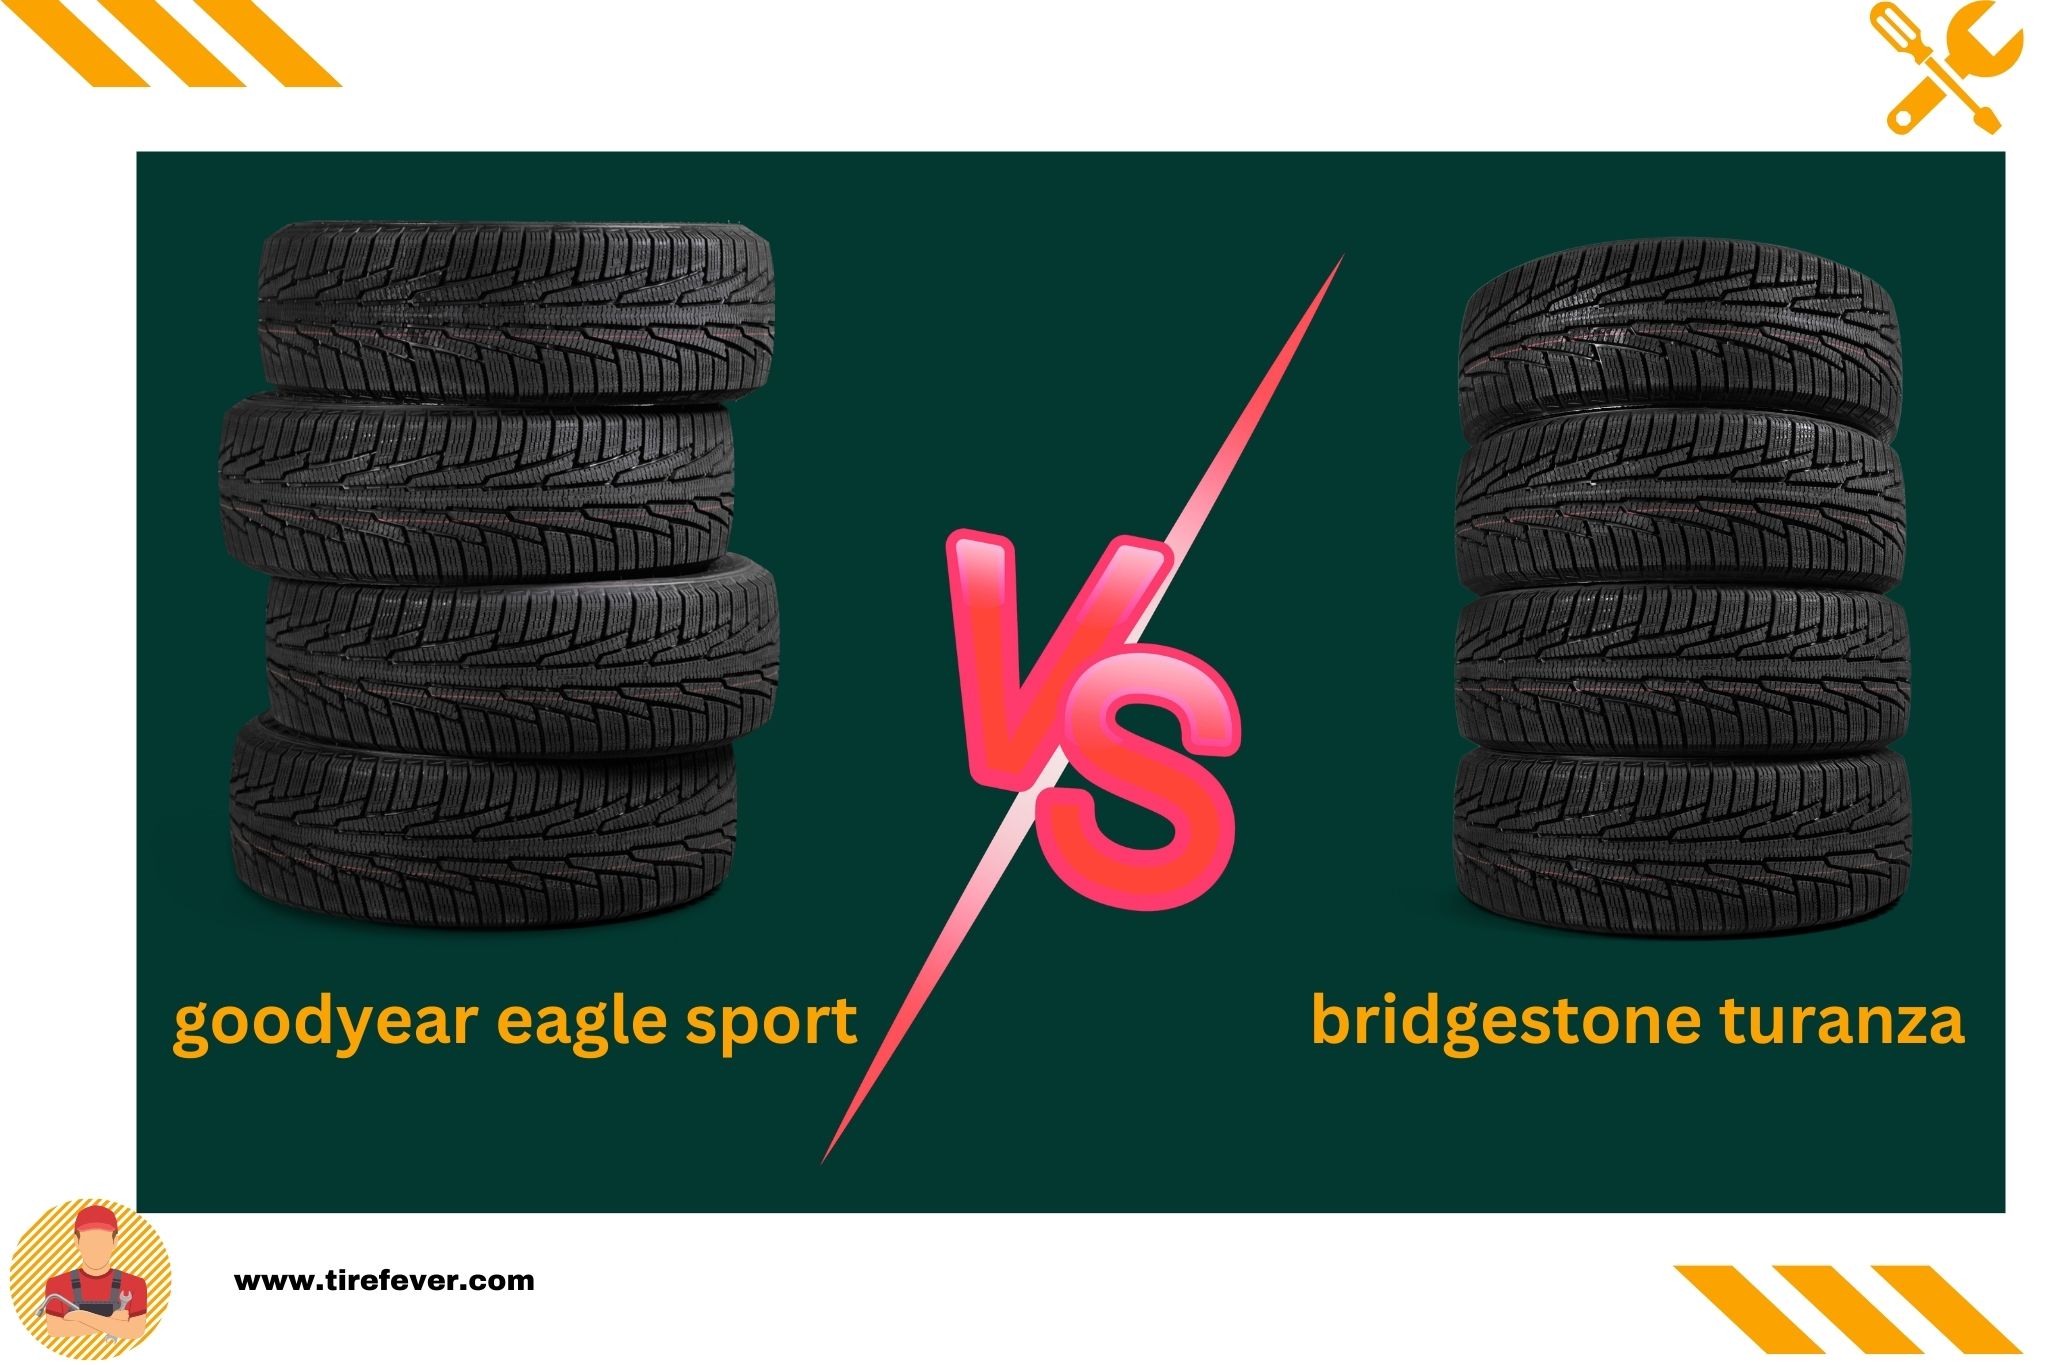 goodyear eagle sport vs bridgestone turanza